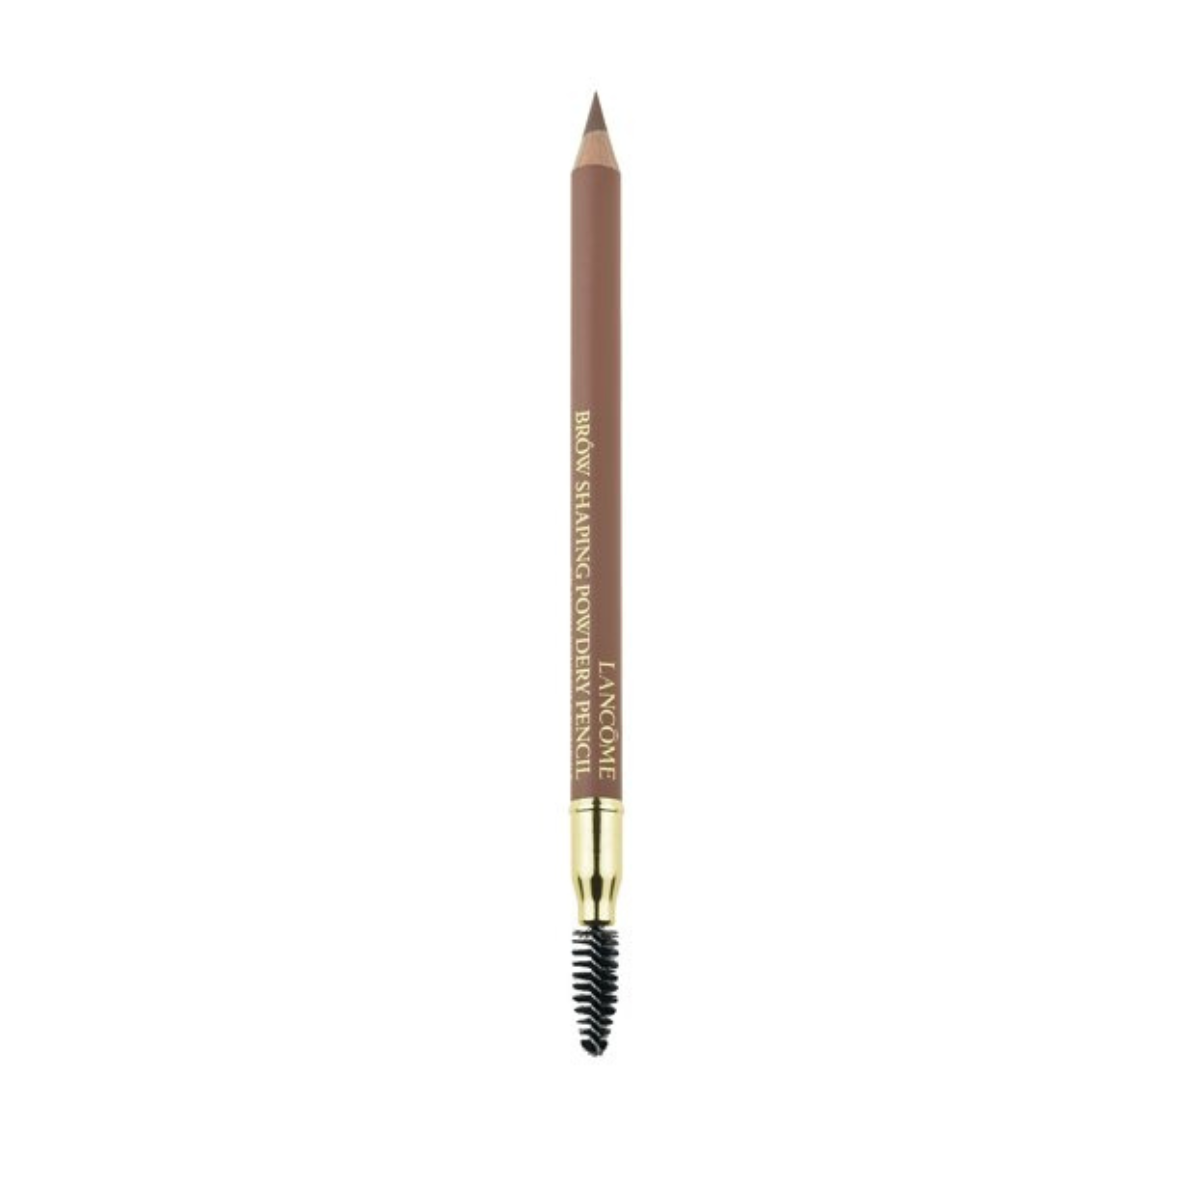 Lancôme Brow Shapping Powdery Pencil